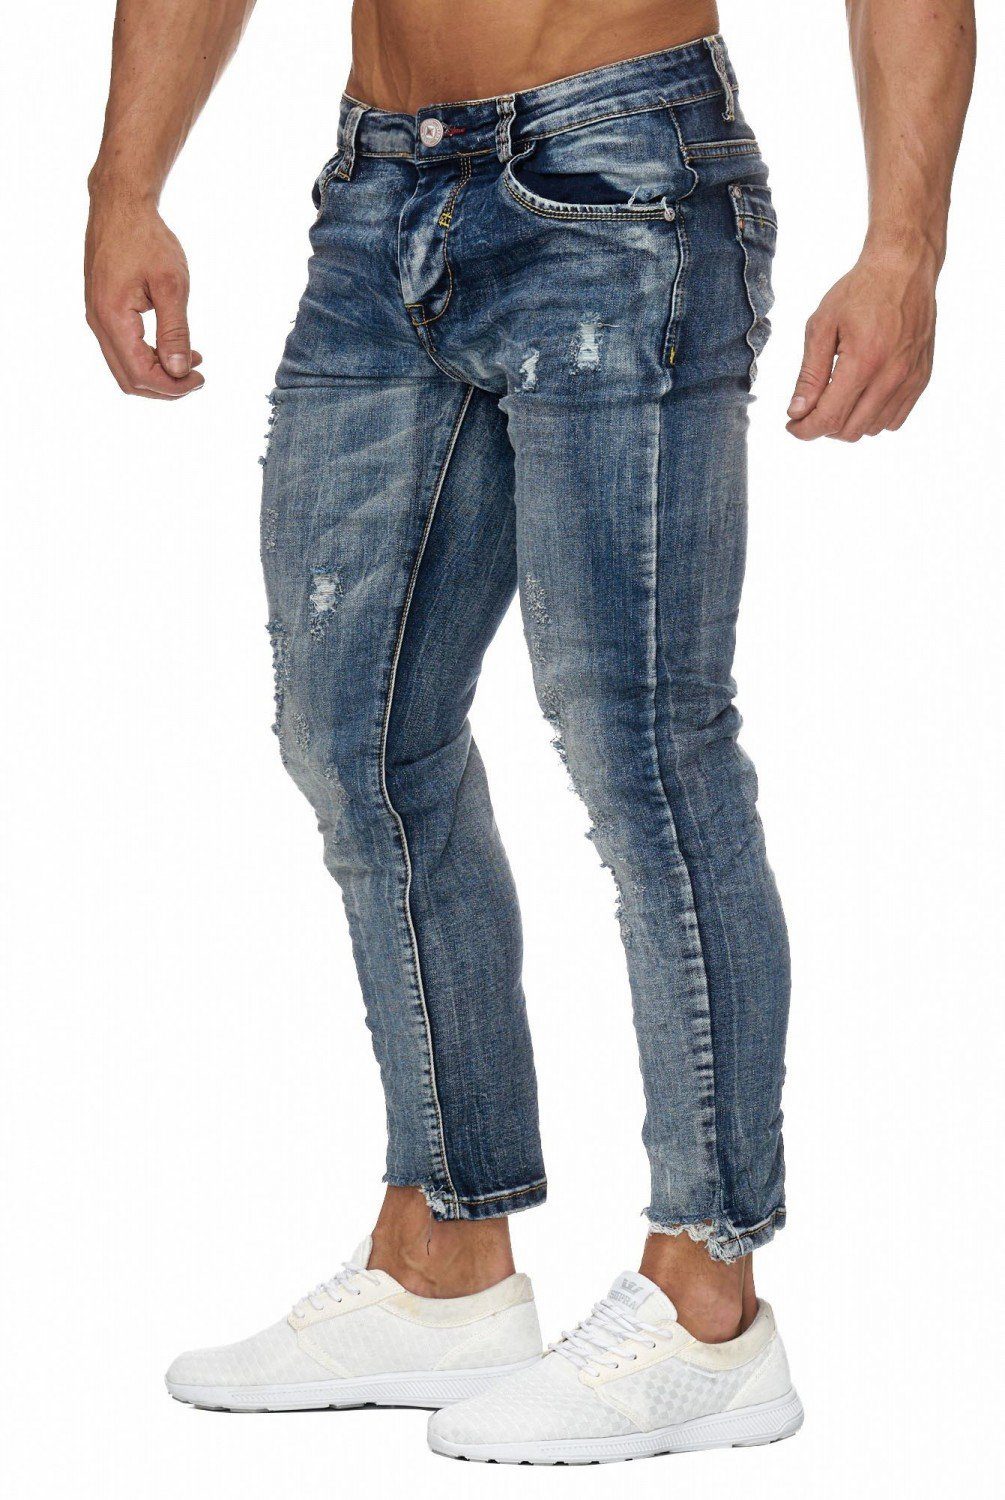 Lavecchia Herren Übergröße Jeans im Biker Look XXXXXL Stretch Crinkle Hose Grau 